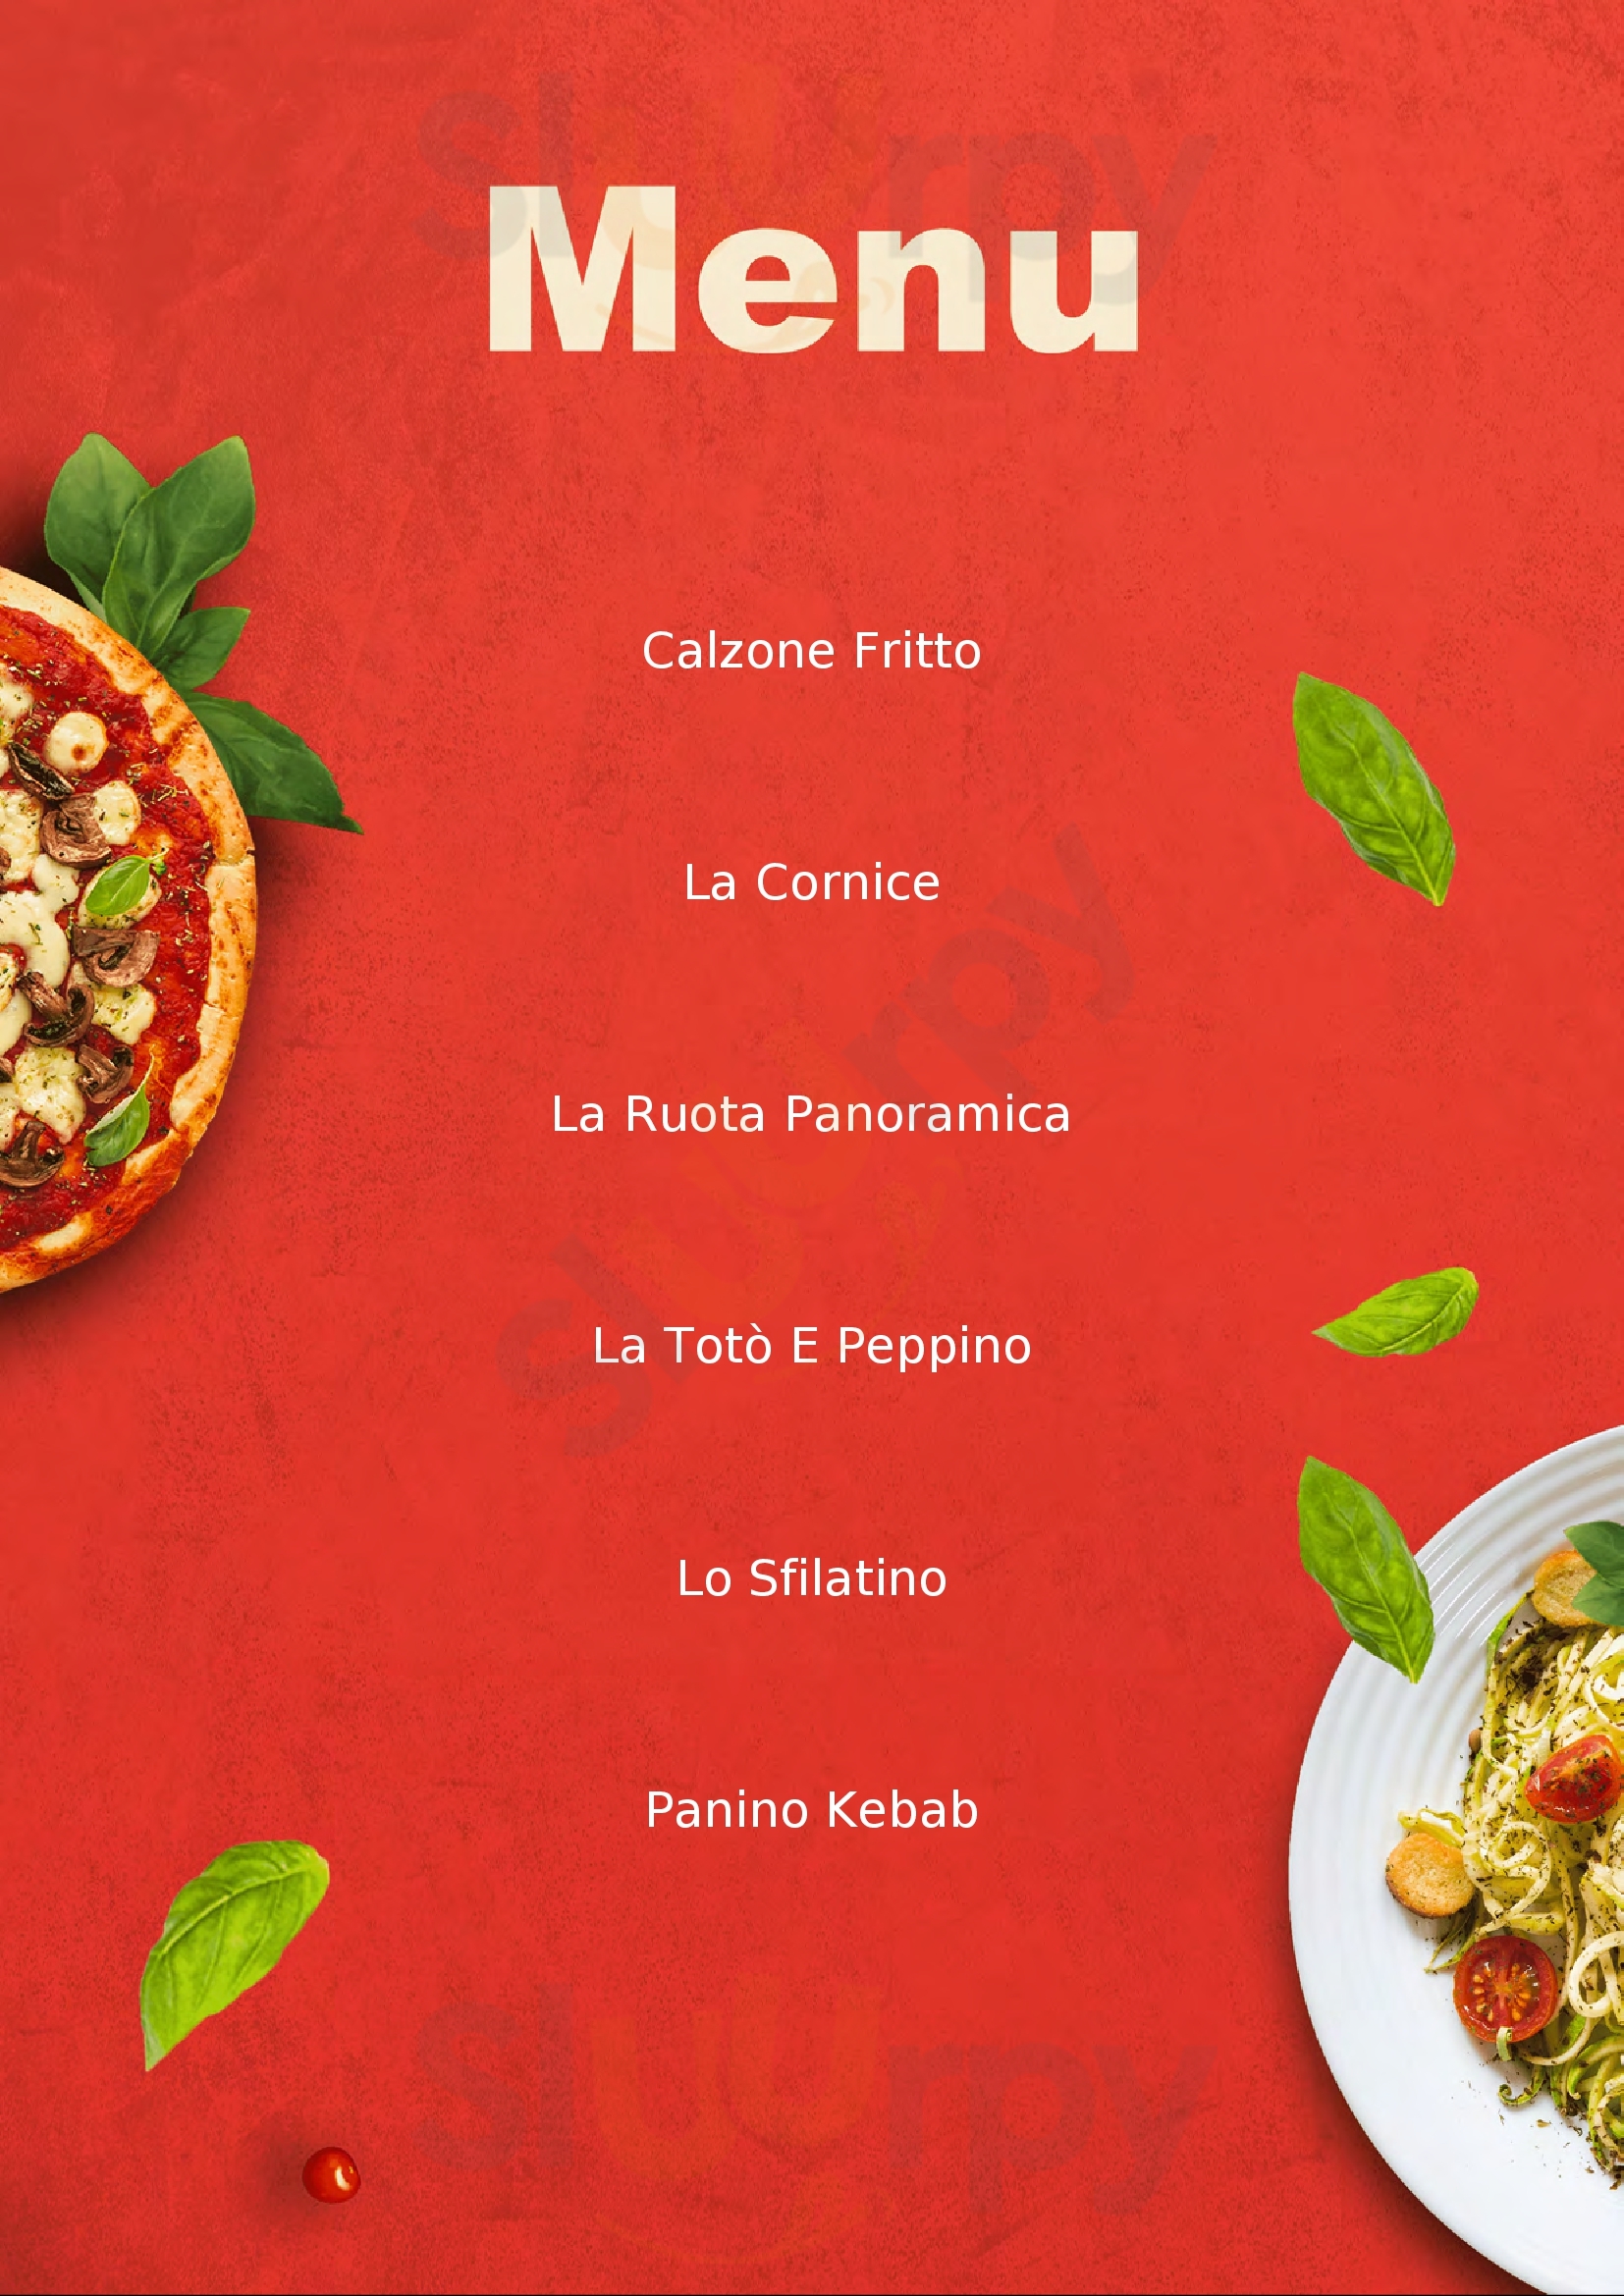 Pizza Mania Ariano Irpino menù 1 pagina